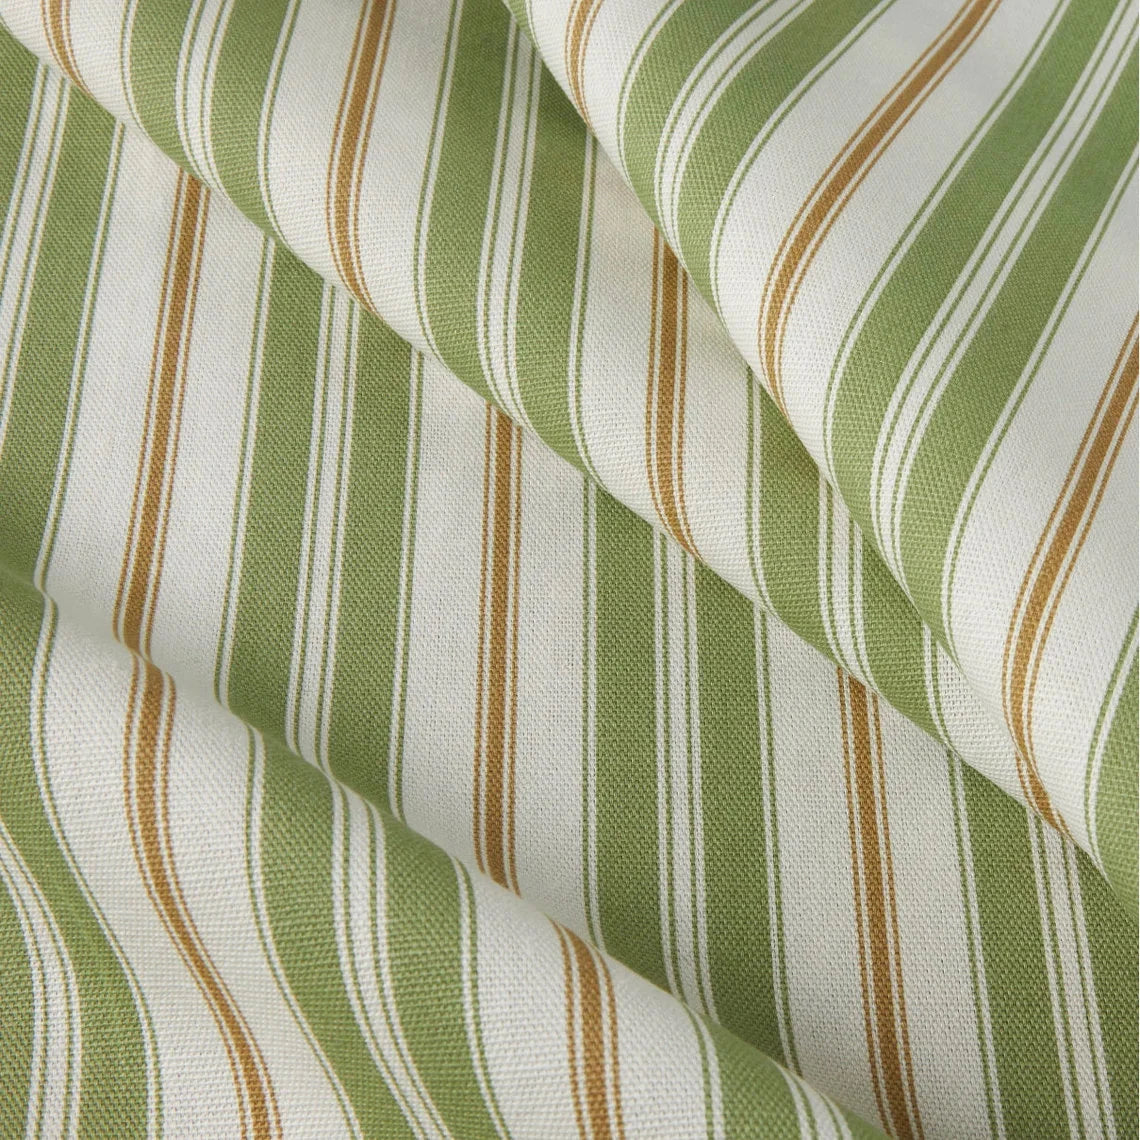 gathered crib skirt in newbury aloe green stripe- green, brown, white